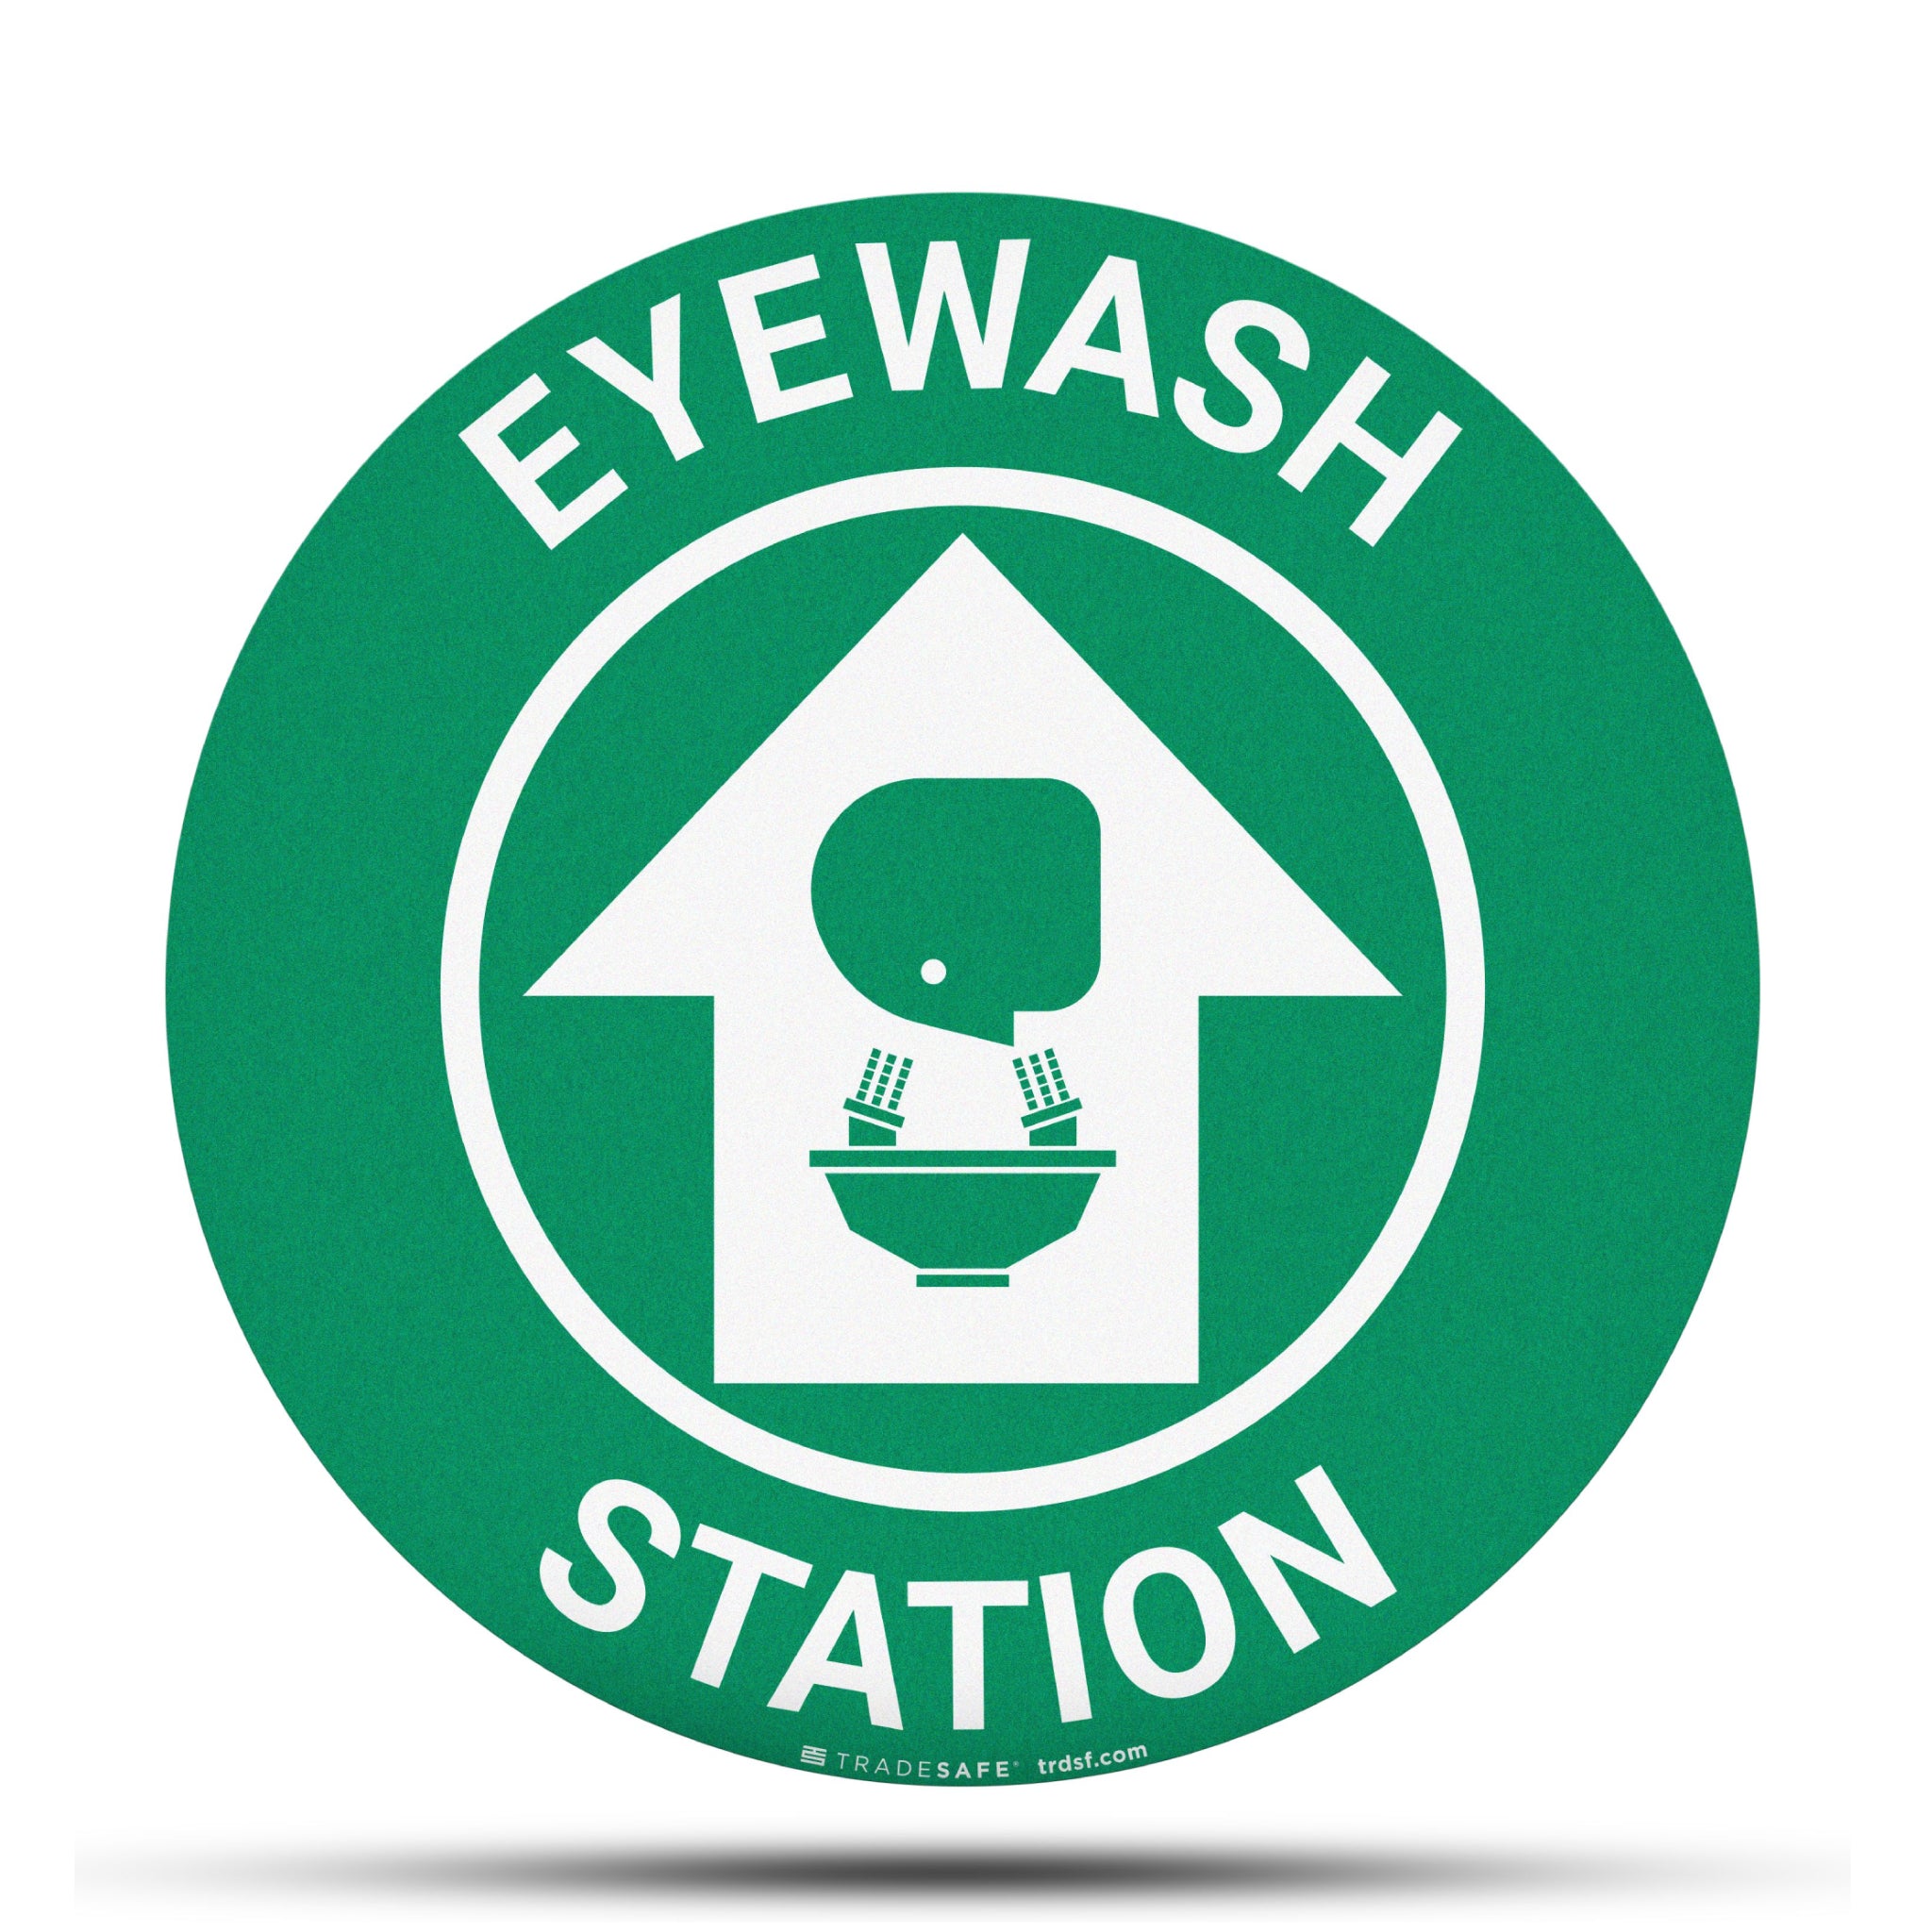 TRADESAFE Eye Wash Station Anti-Slip Floor Sticker - Emergency Eyewash Station Sign, Peel and Stick Adhesive Vinyl Sign, ANSI-Compliant, 17”